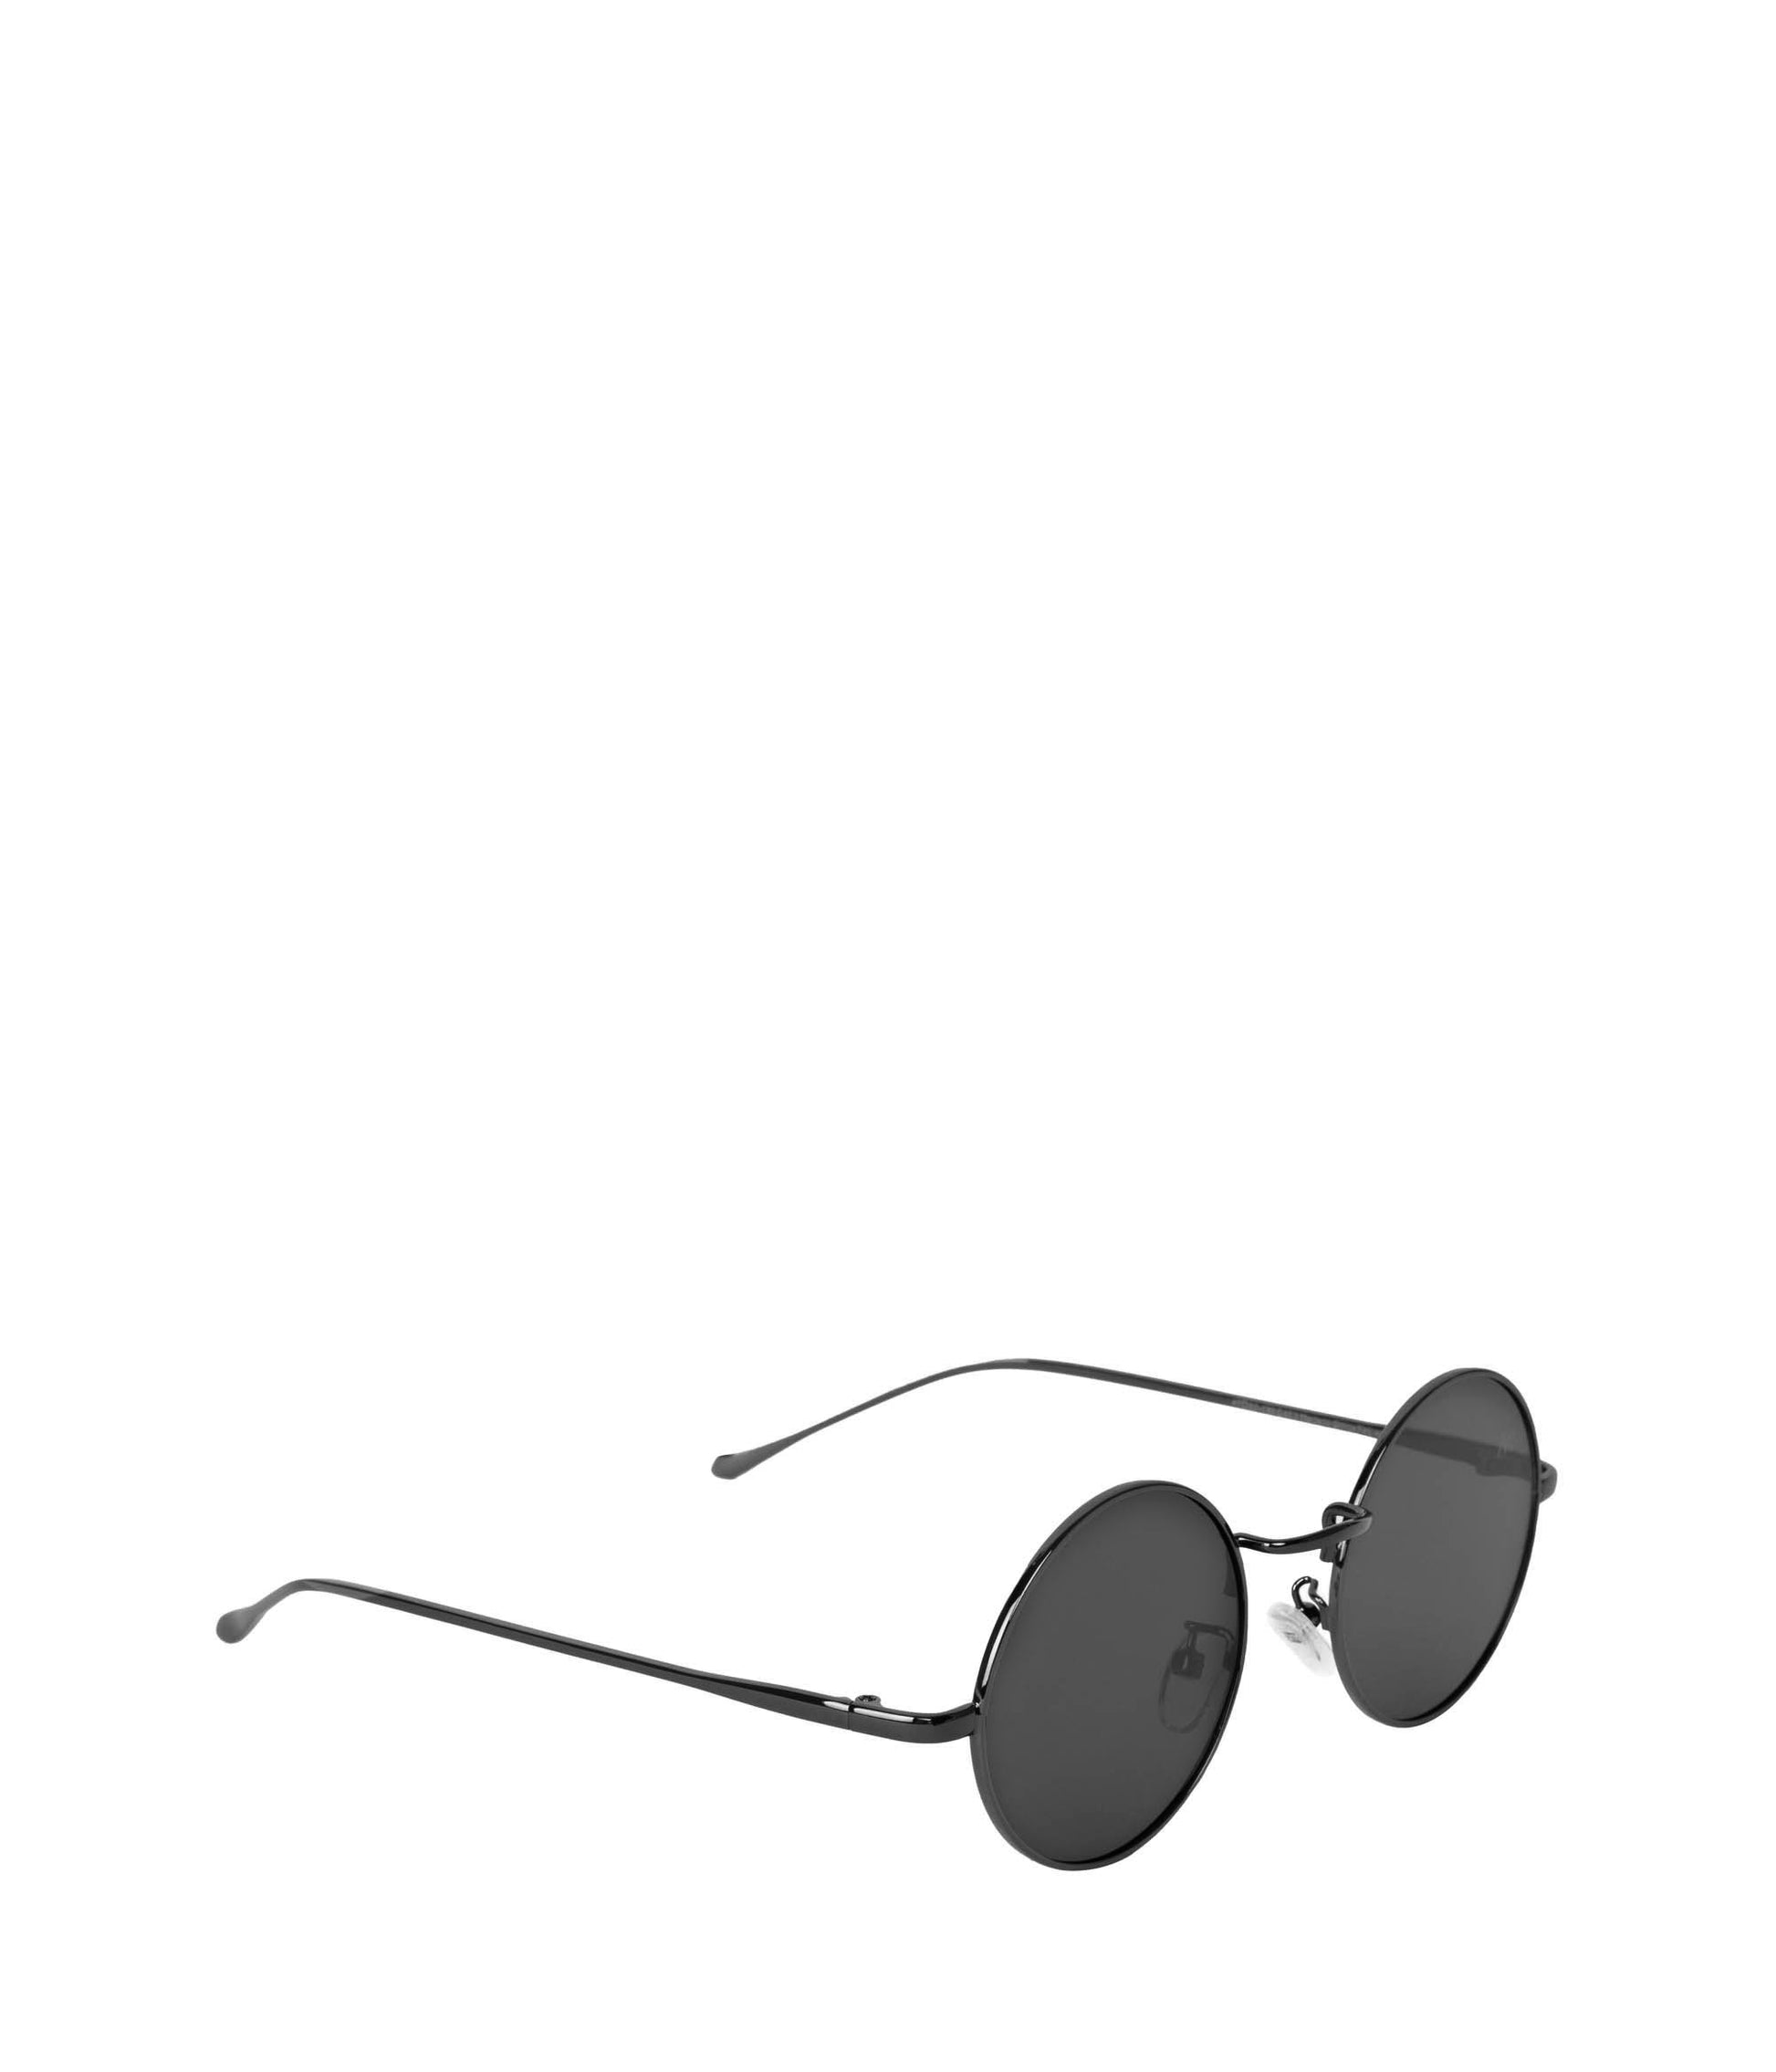 COLE SM Small Round Sunglasses | Color: Black - variant::mblbla